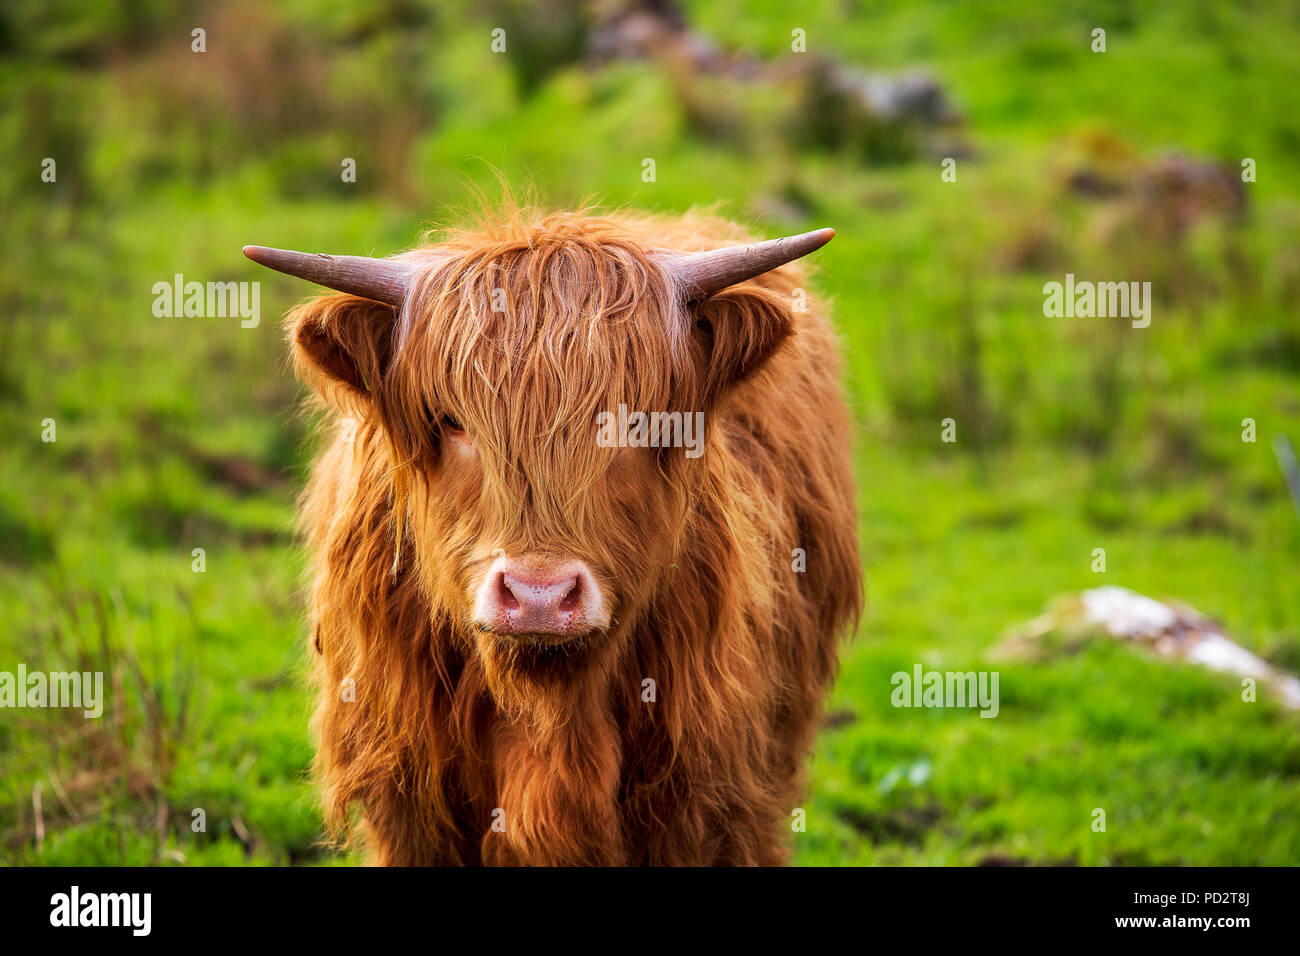 Highland cattle on the Applecross peninsula Stock Photo